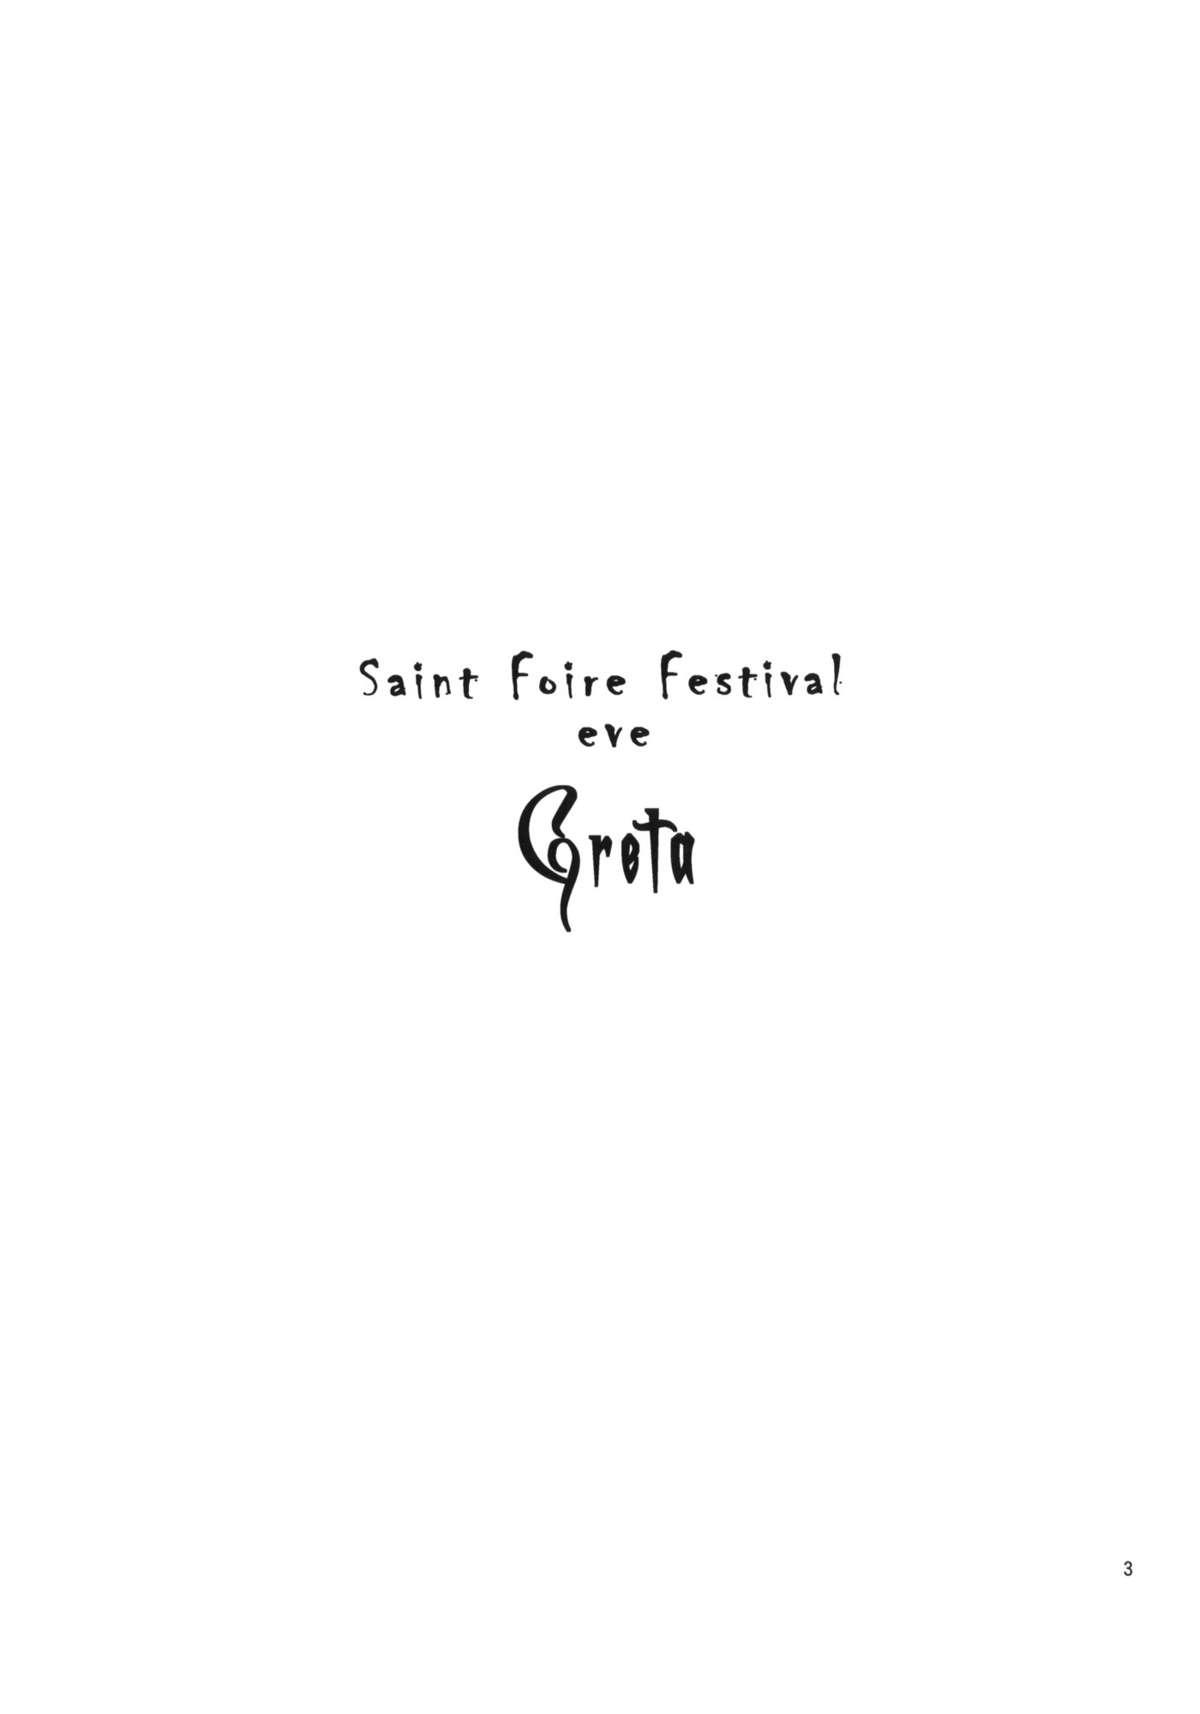 Saint Foire Festival eve Greta 1